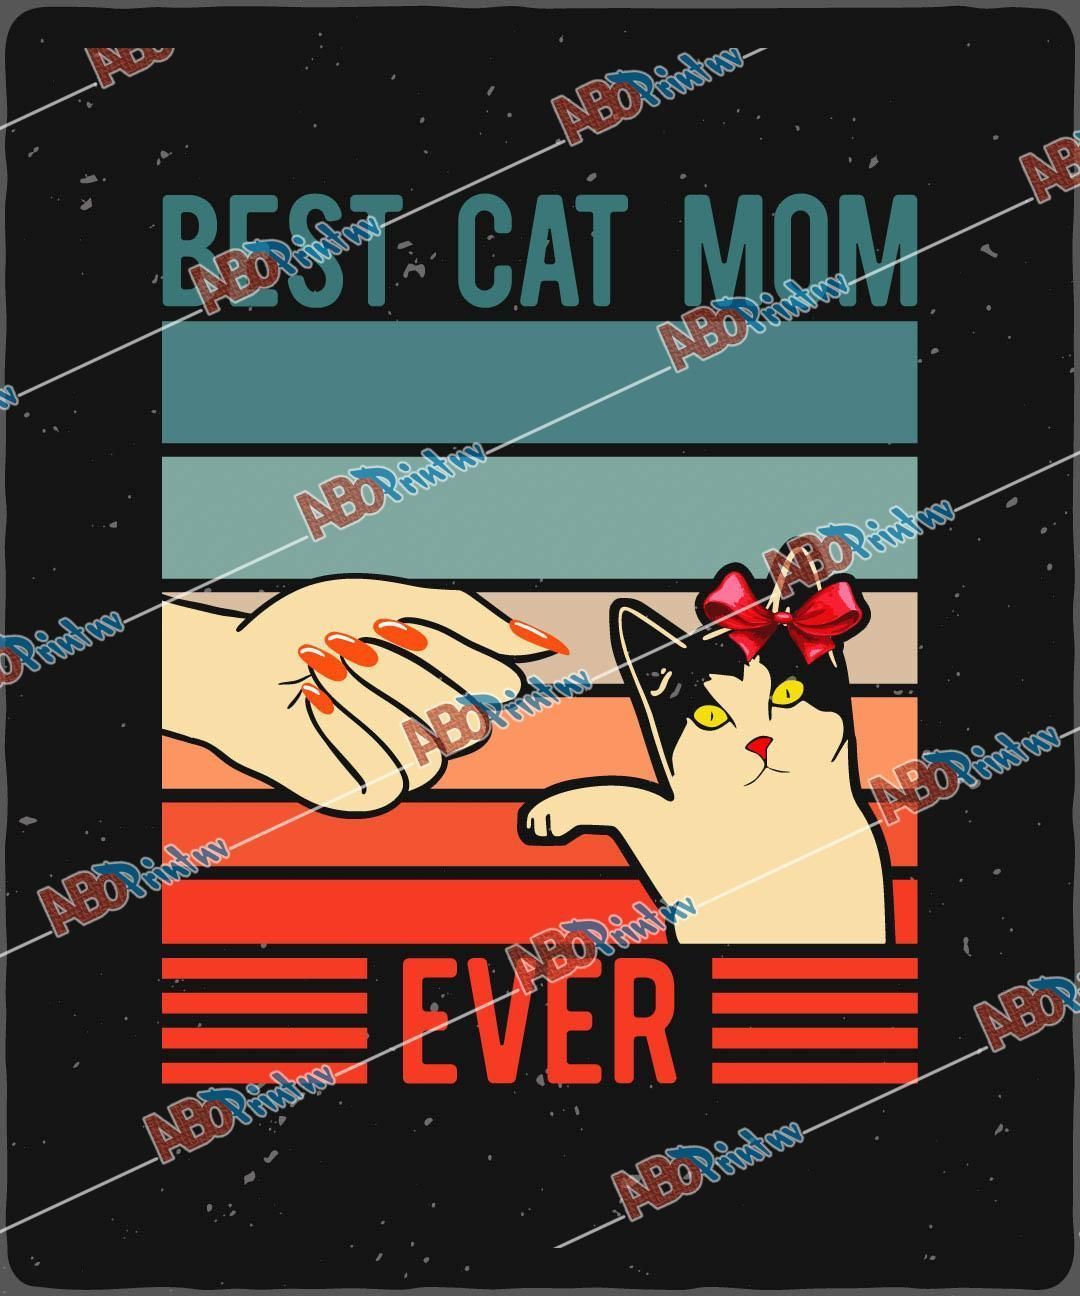 Best Cat Mom Ever.jpg